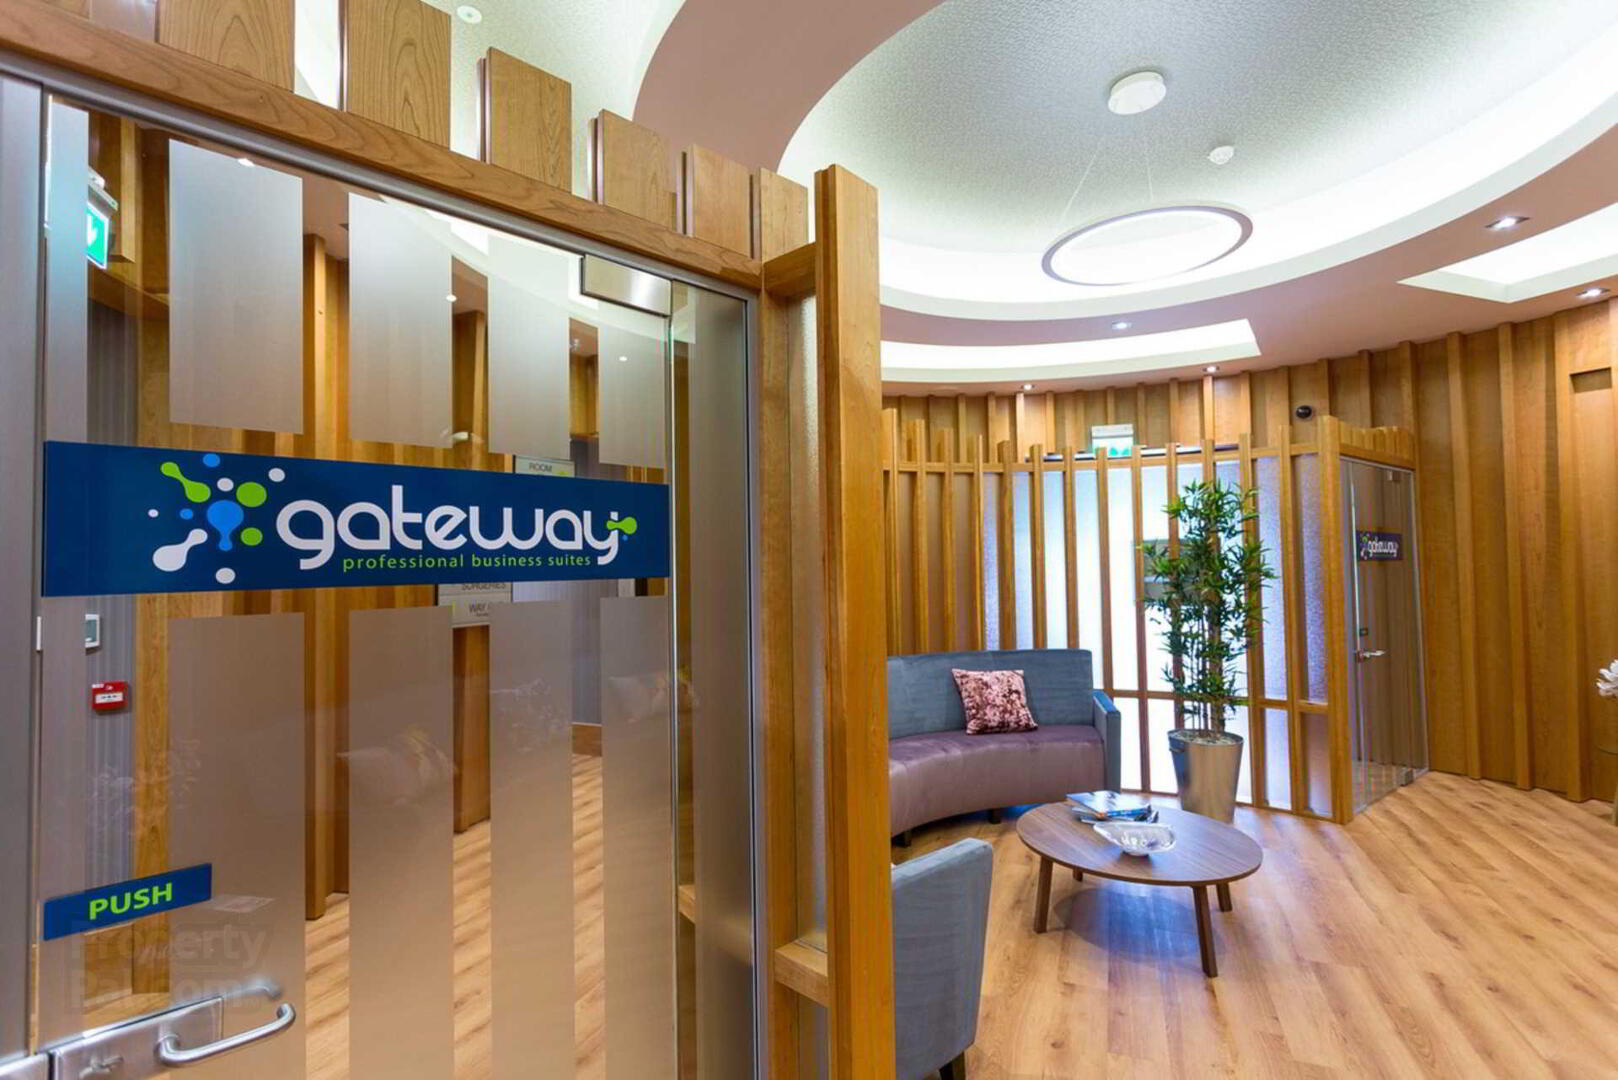 Gateway Professional Business Suites